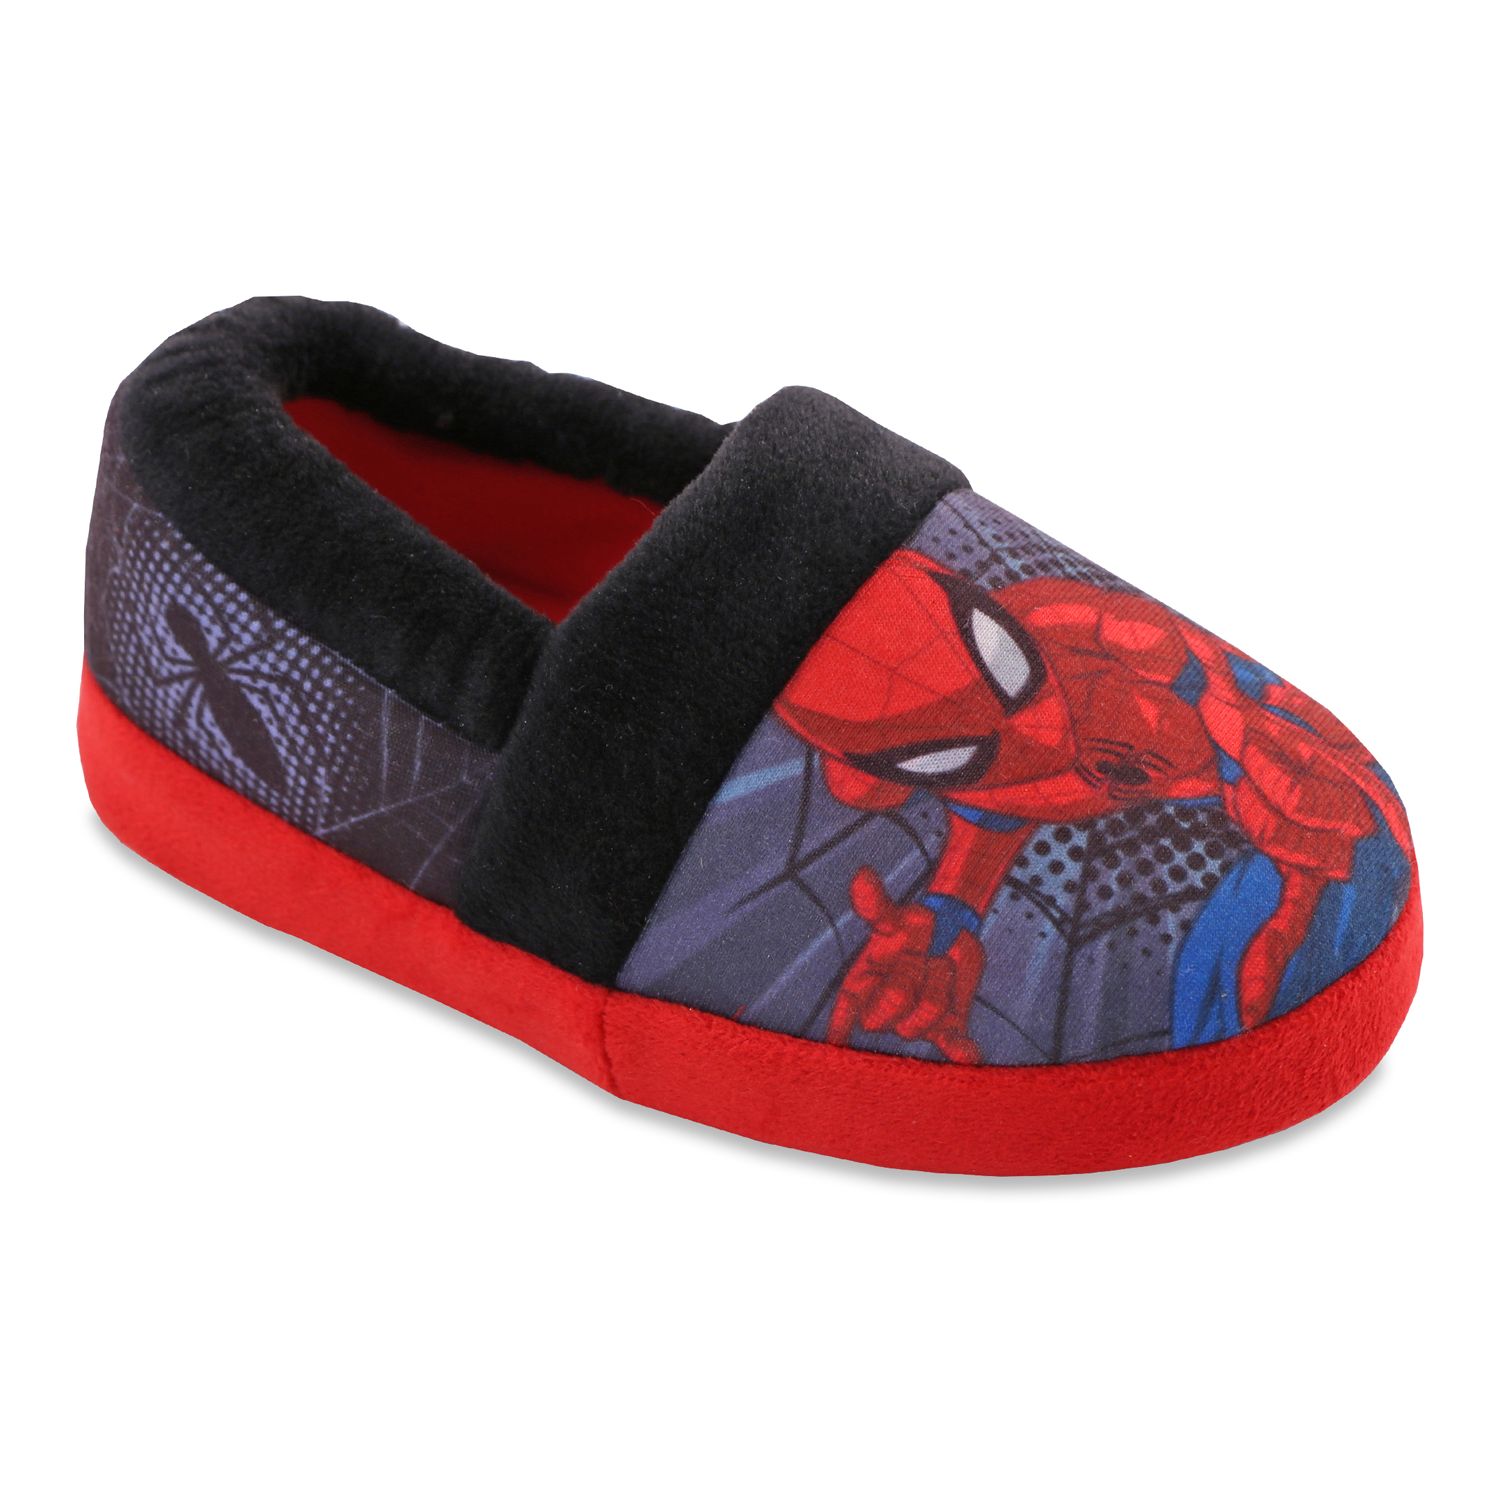 spiderman slippers for boys